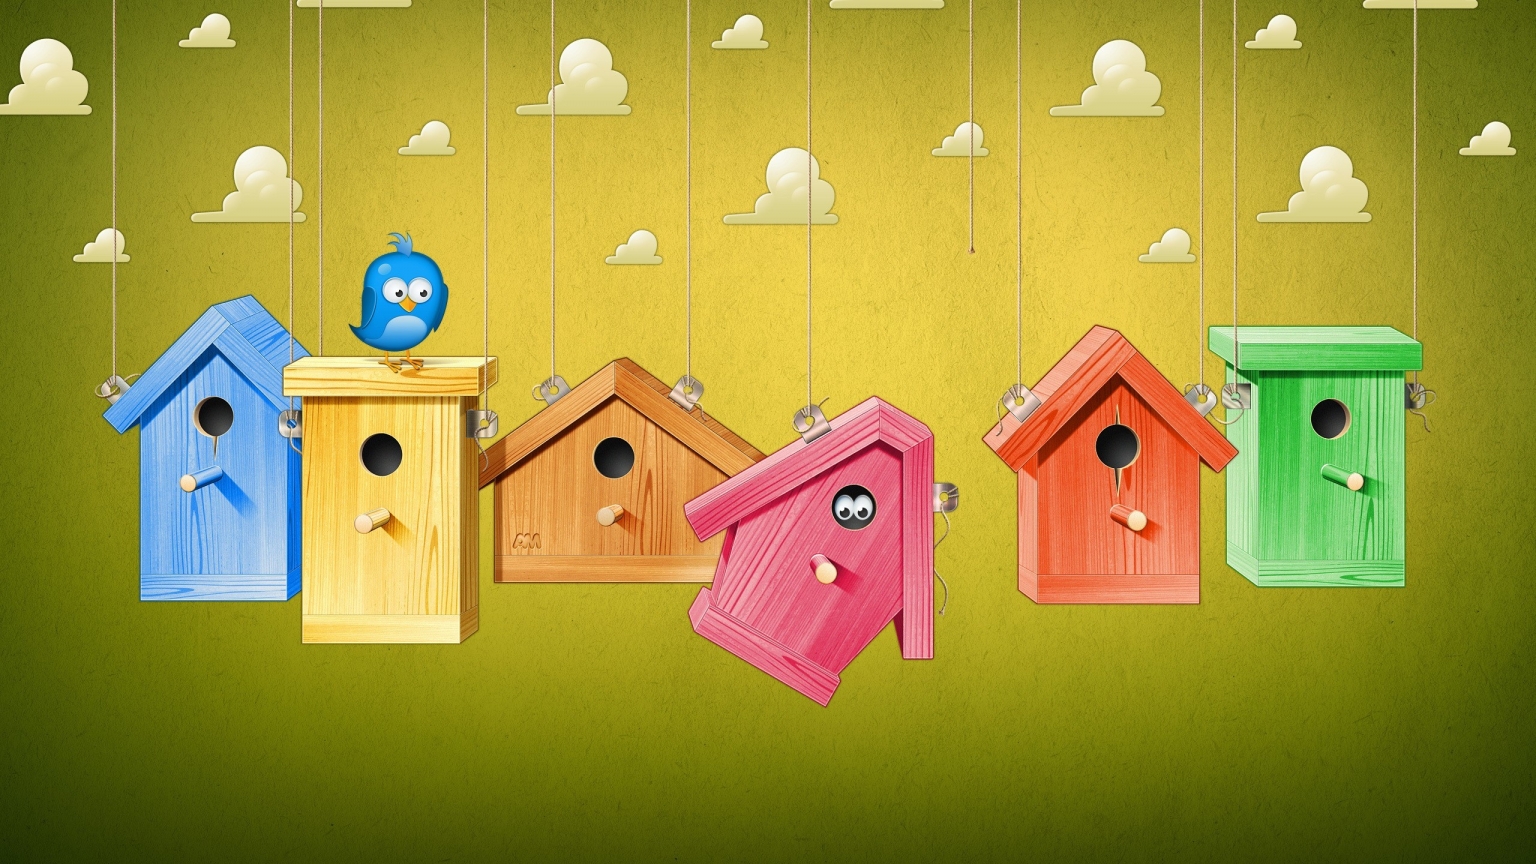 Cute Bird Houses for 1536 x 864 HDTV resolution